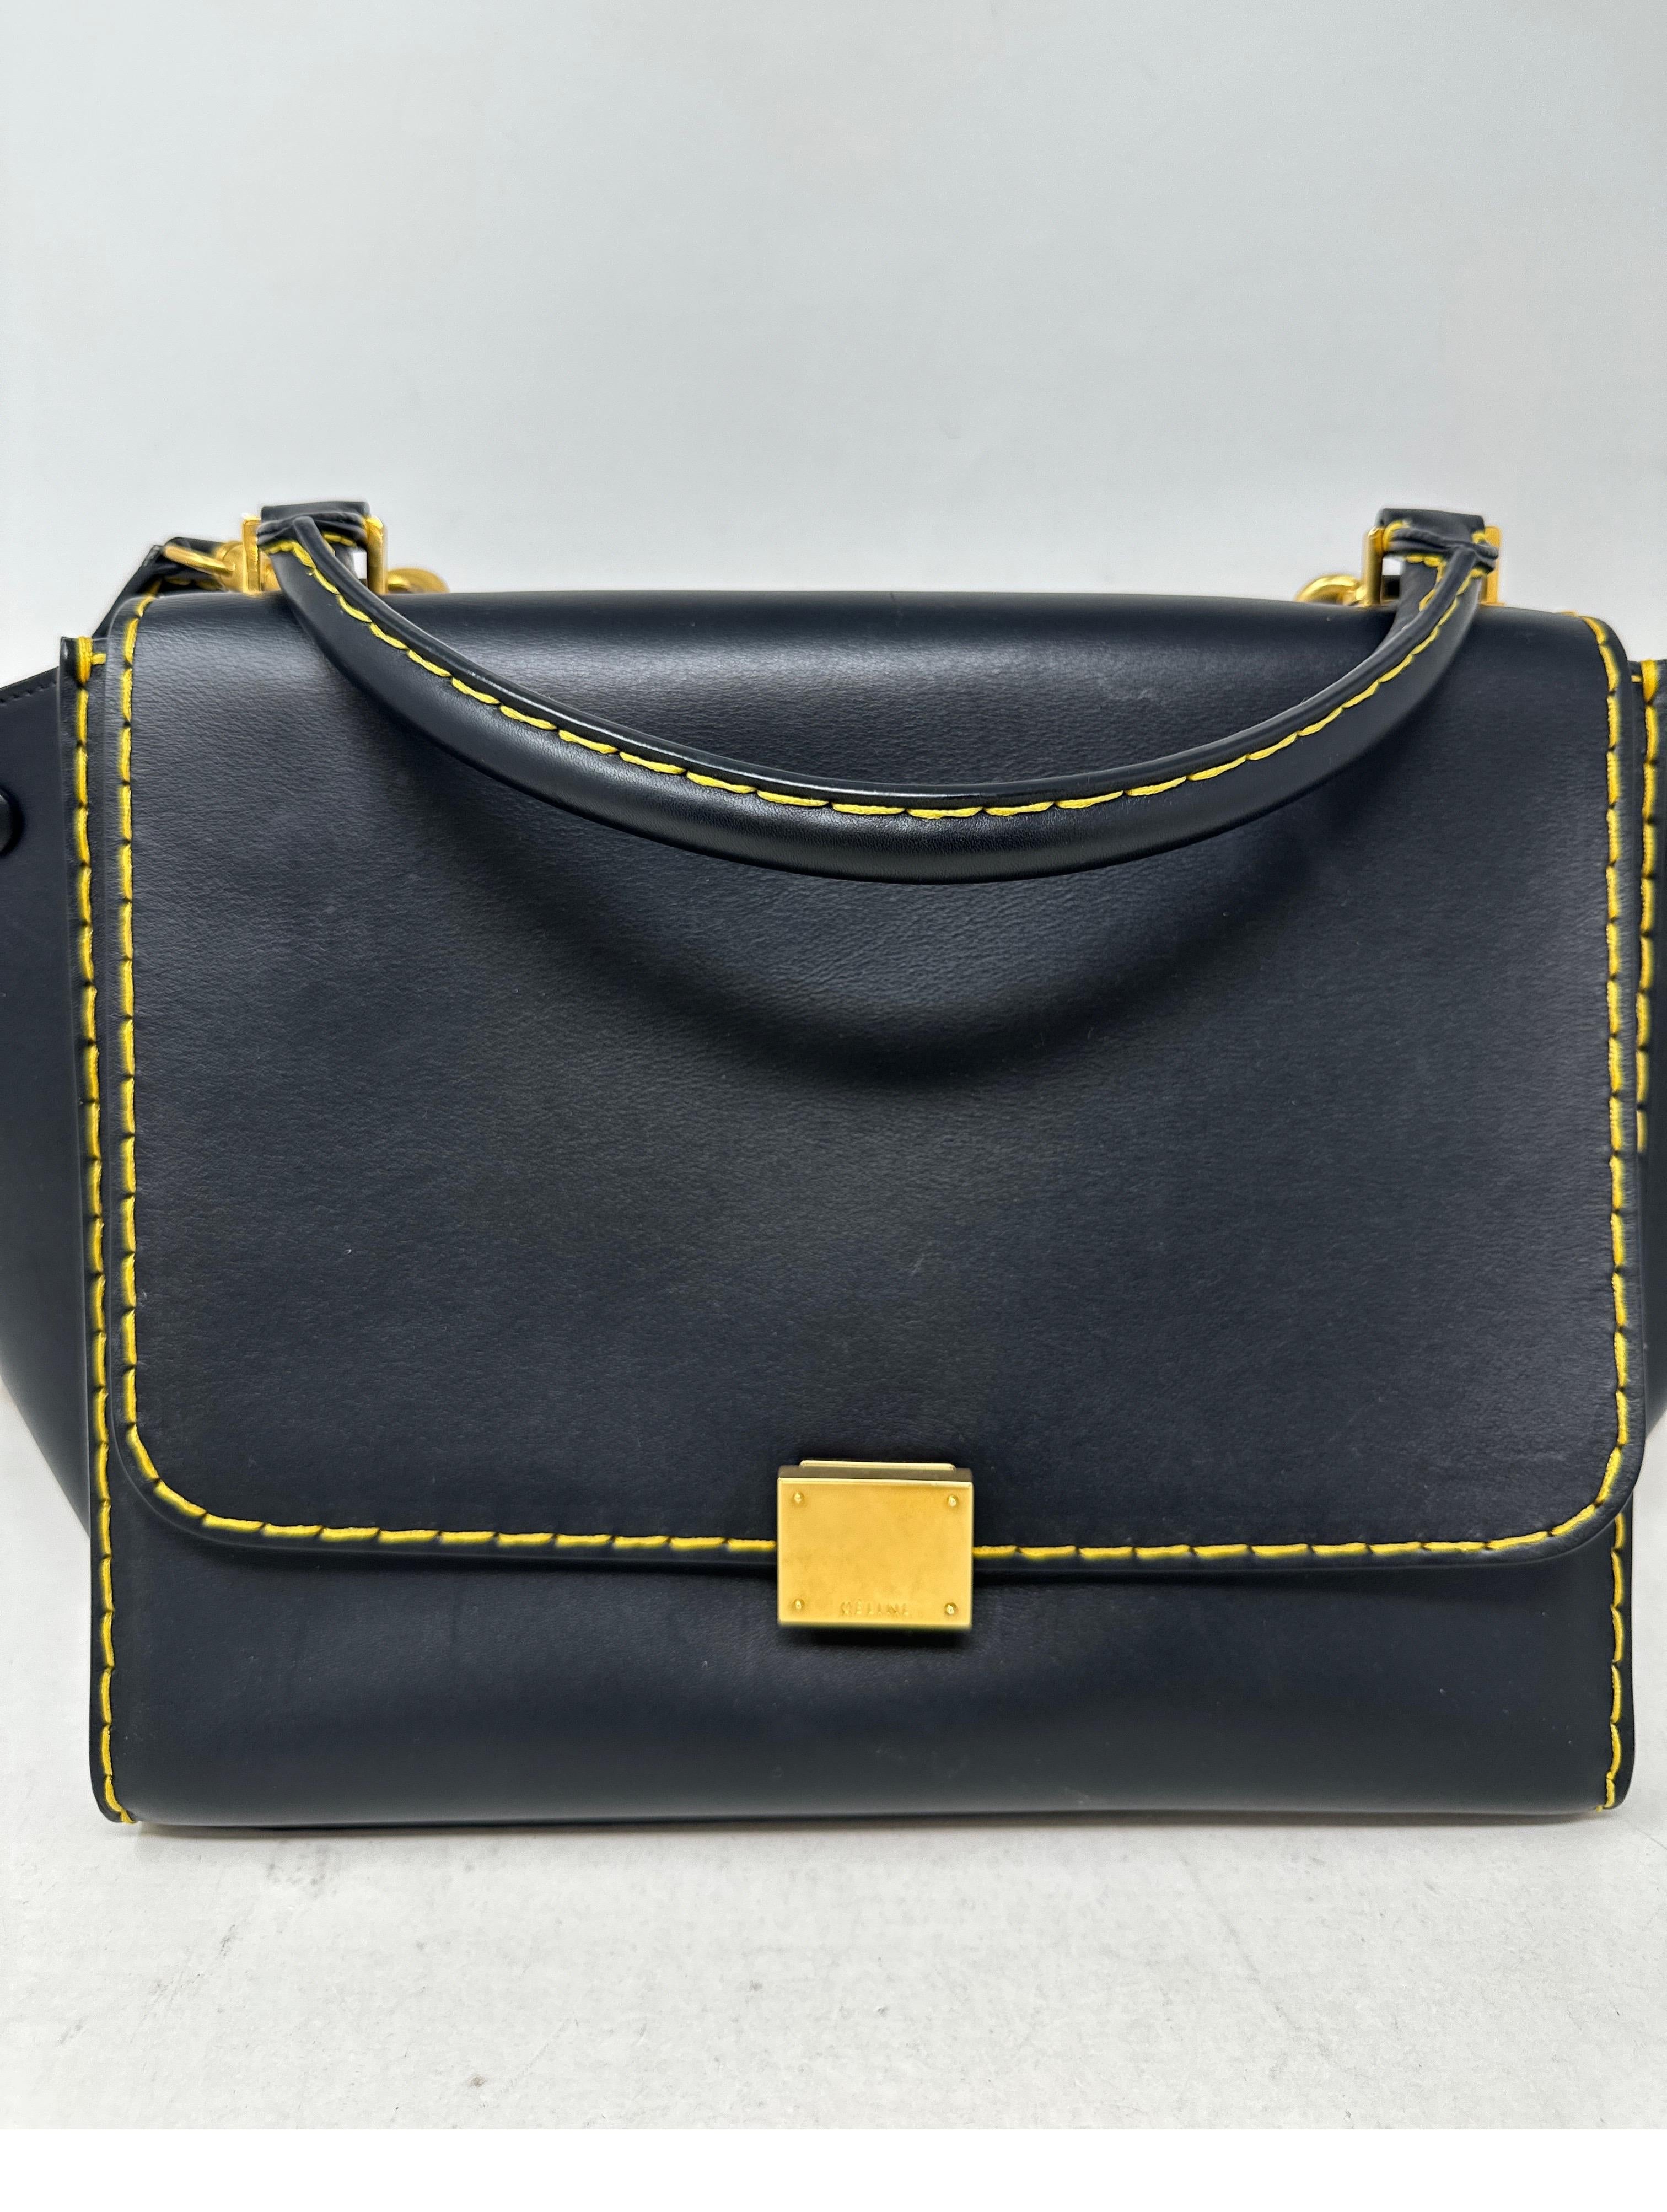 Celine Black Bag  In Excellent Condition For Sale In Athens, GA